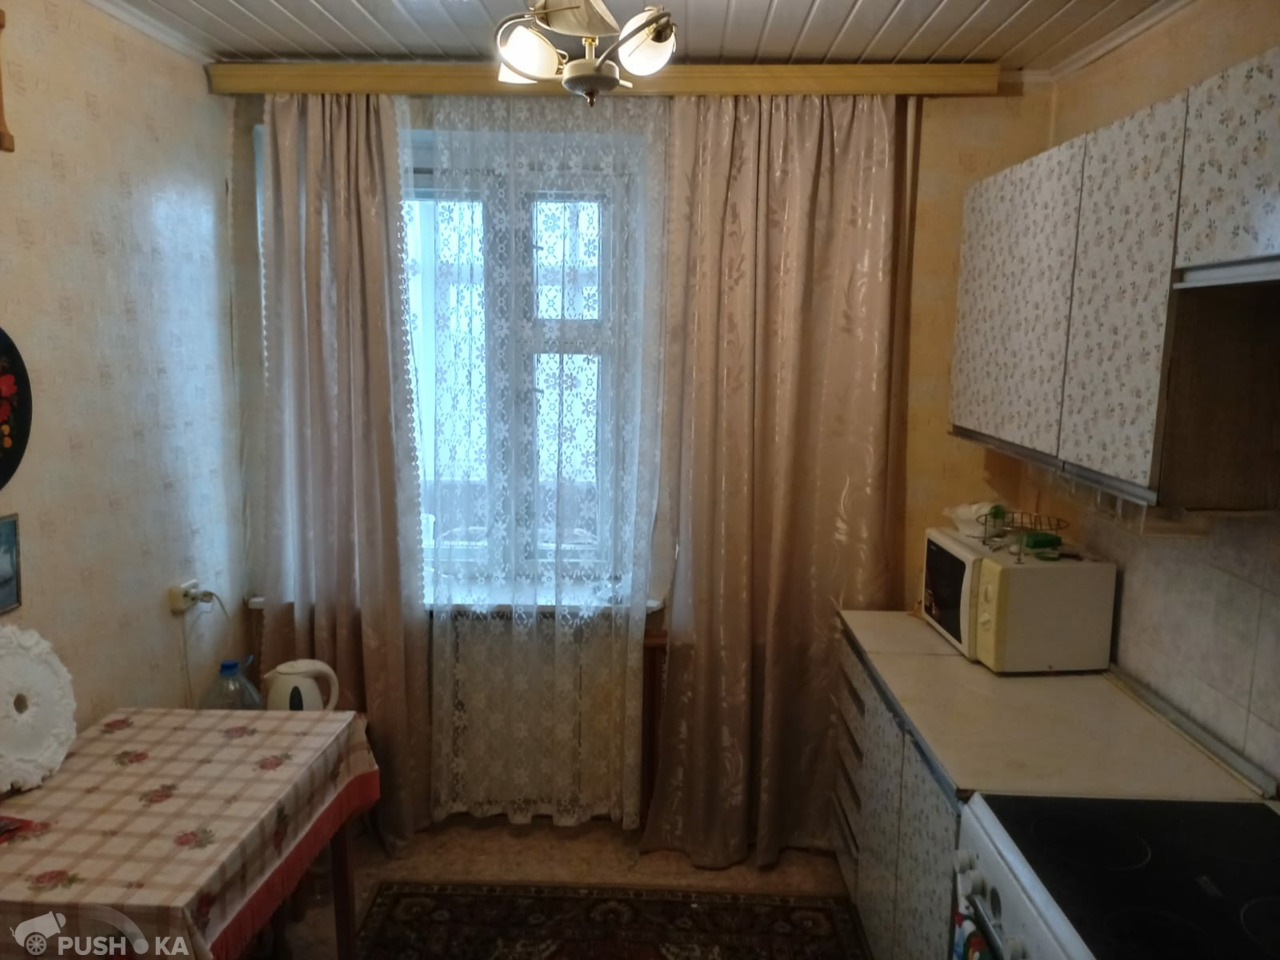 Продаётся 2-комнатная квартира 48.0 кв.м. этаж 8/10 за 3 450 000 руб 